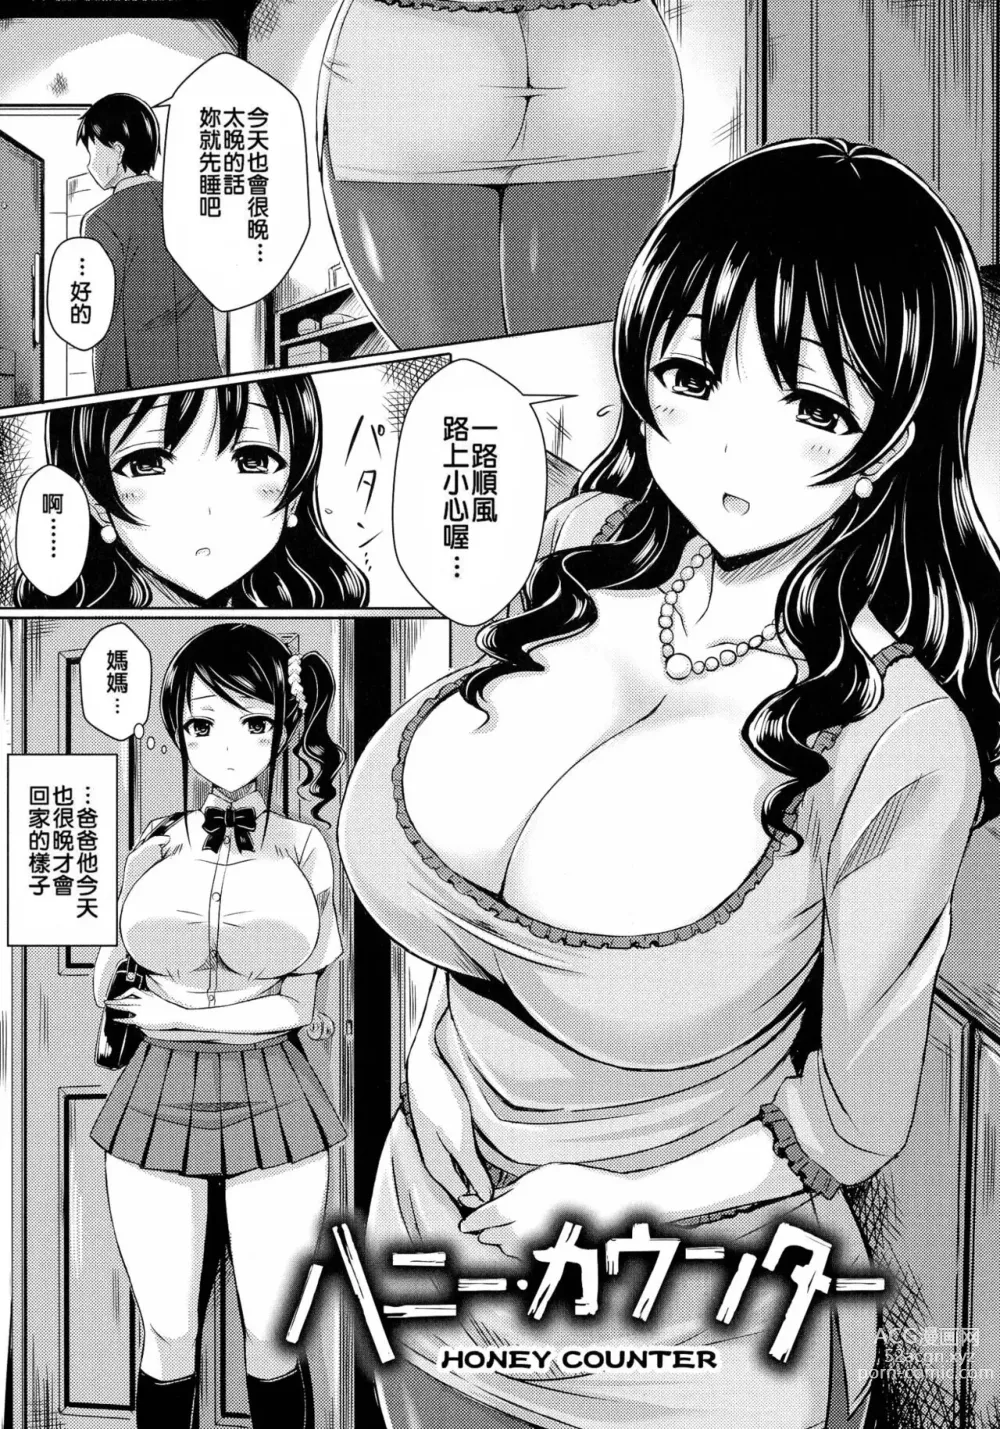 Page 2 of manga Honey Counter